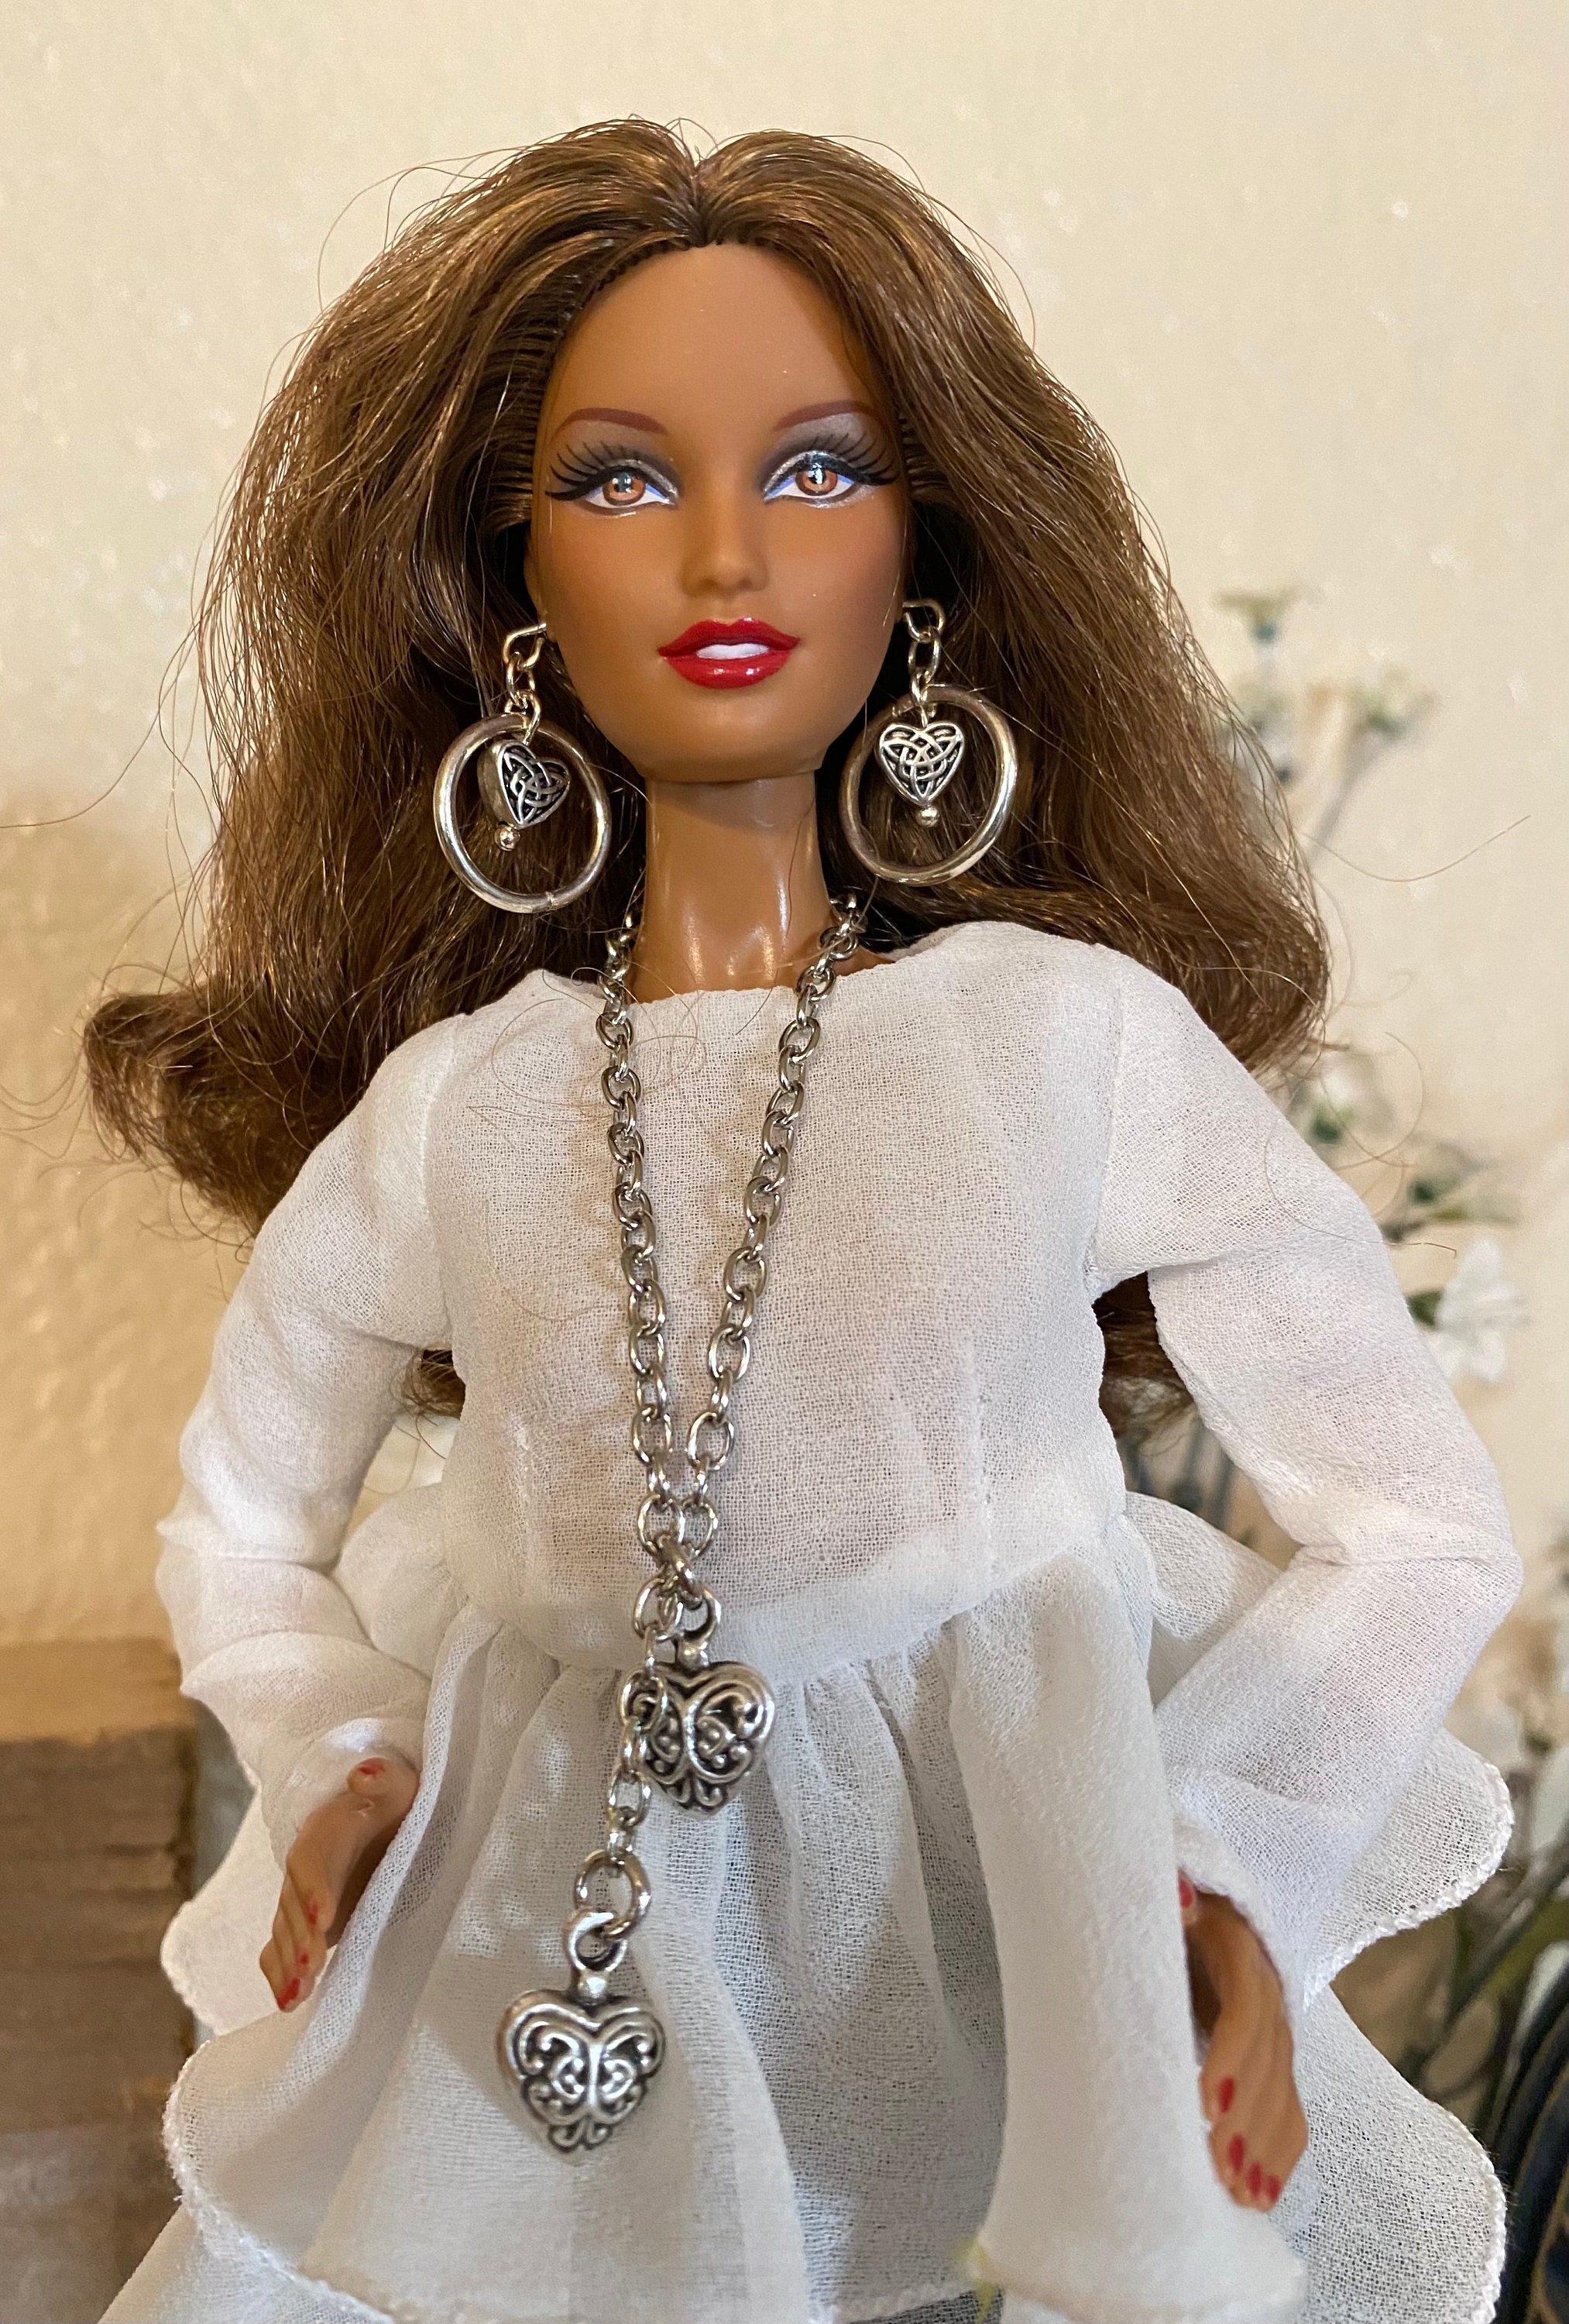 Fashion Dolls Beautiful 14 inch doll your little girl will love., 14 inch -  Kroger